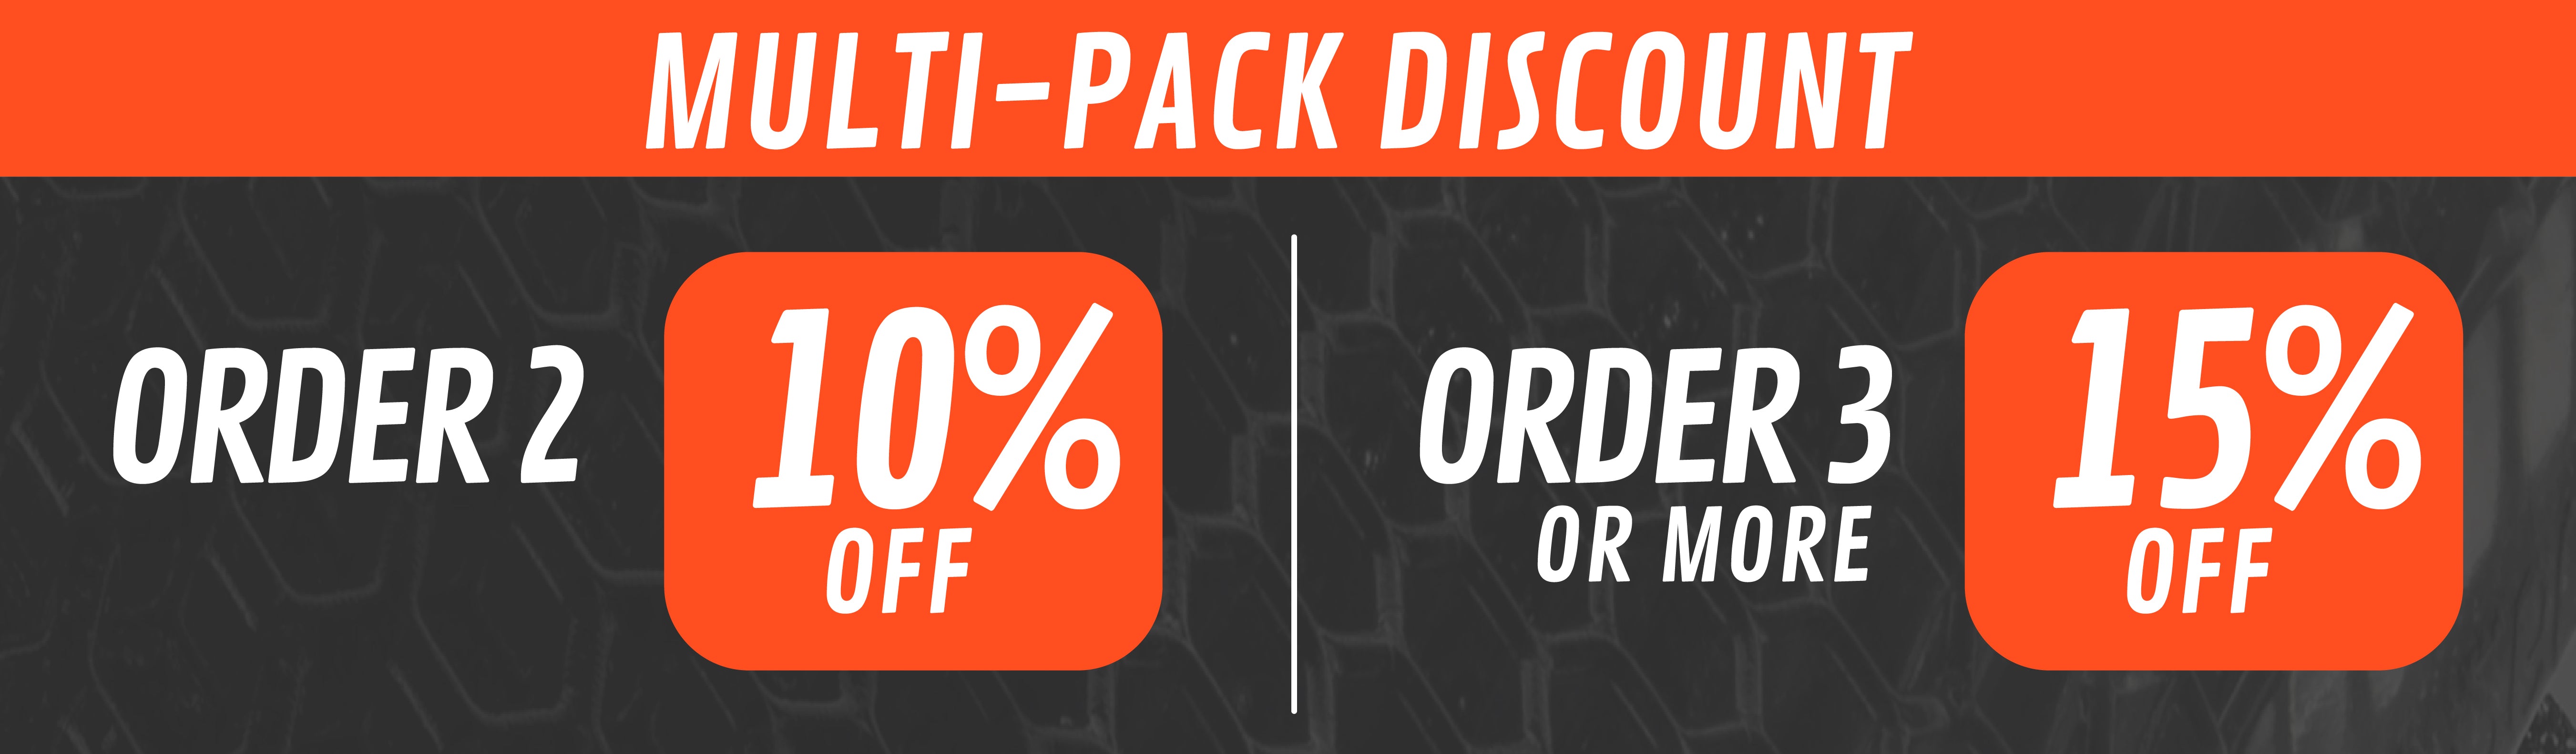 Multi pack discount 